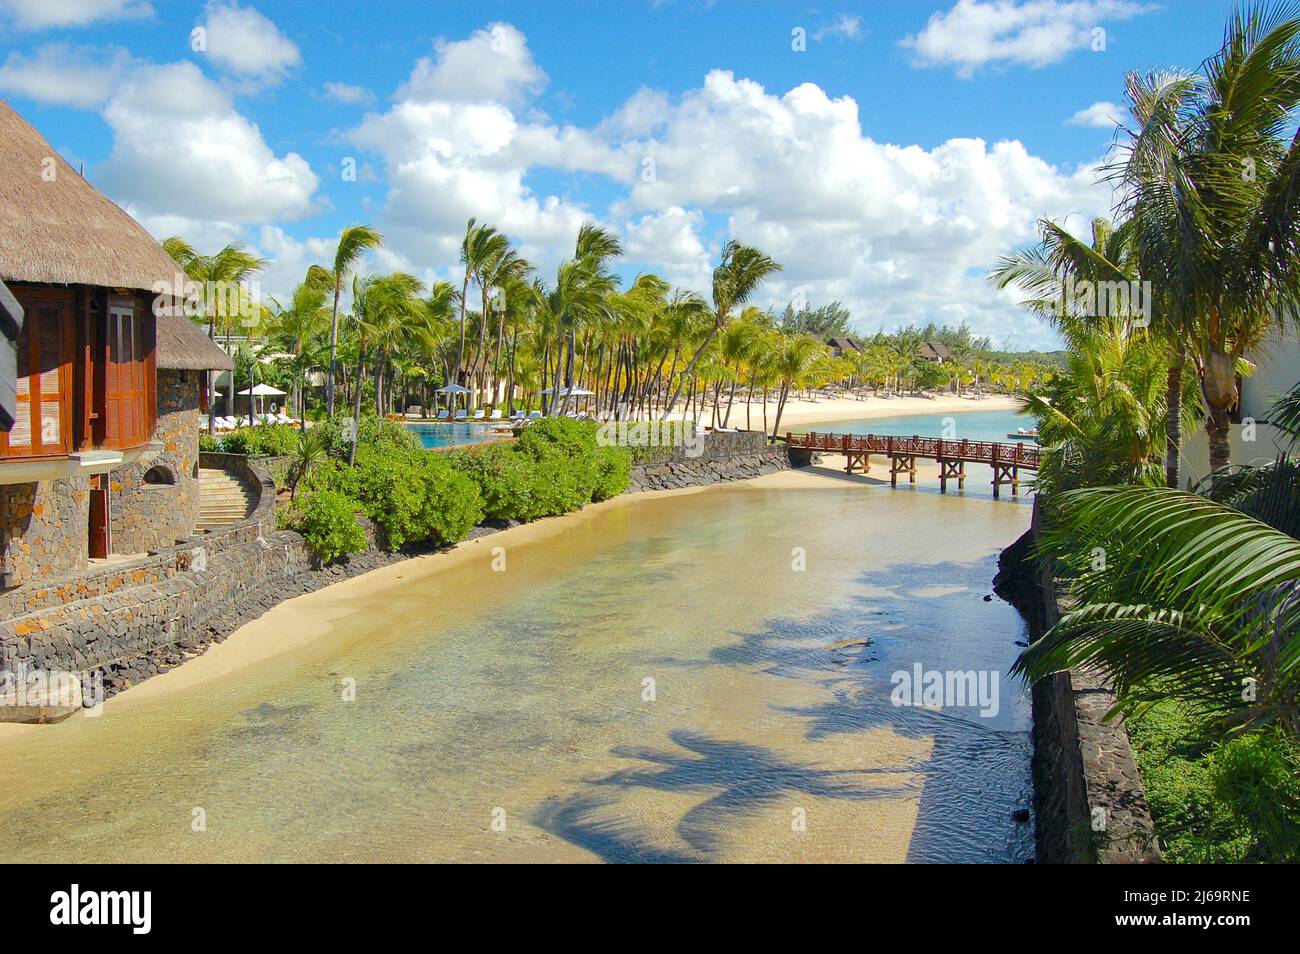 a small bridge over a river in a hotel in Mauritius Stock Photo